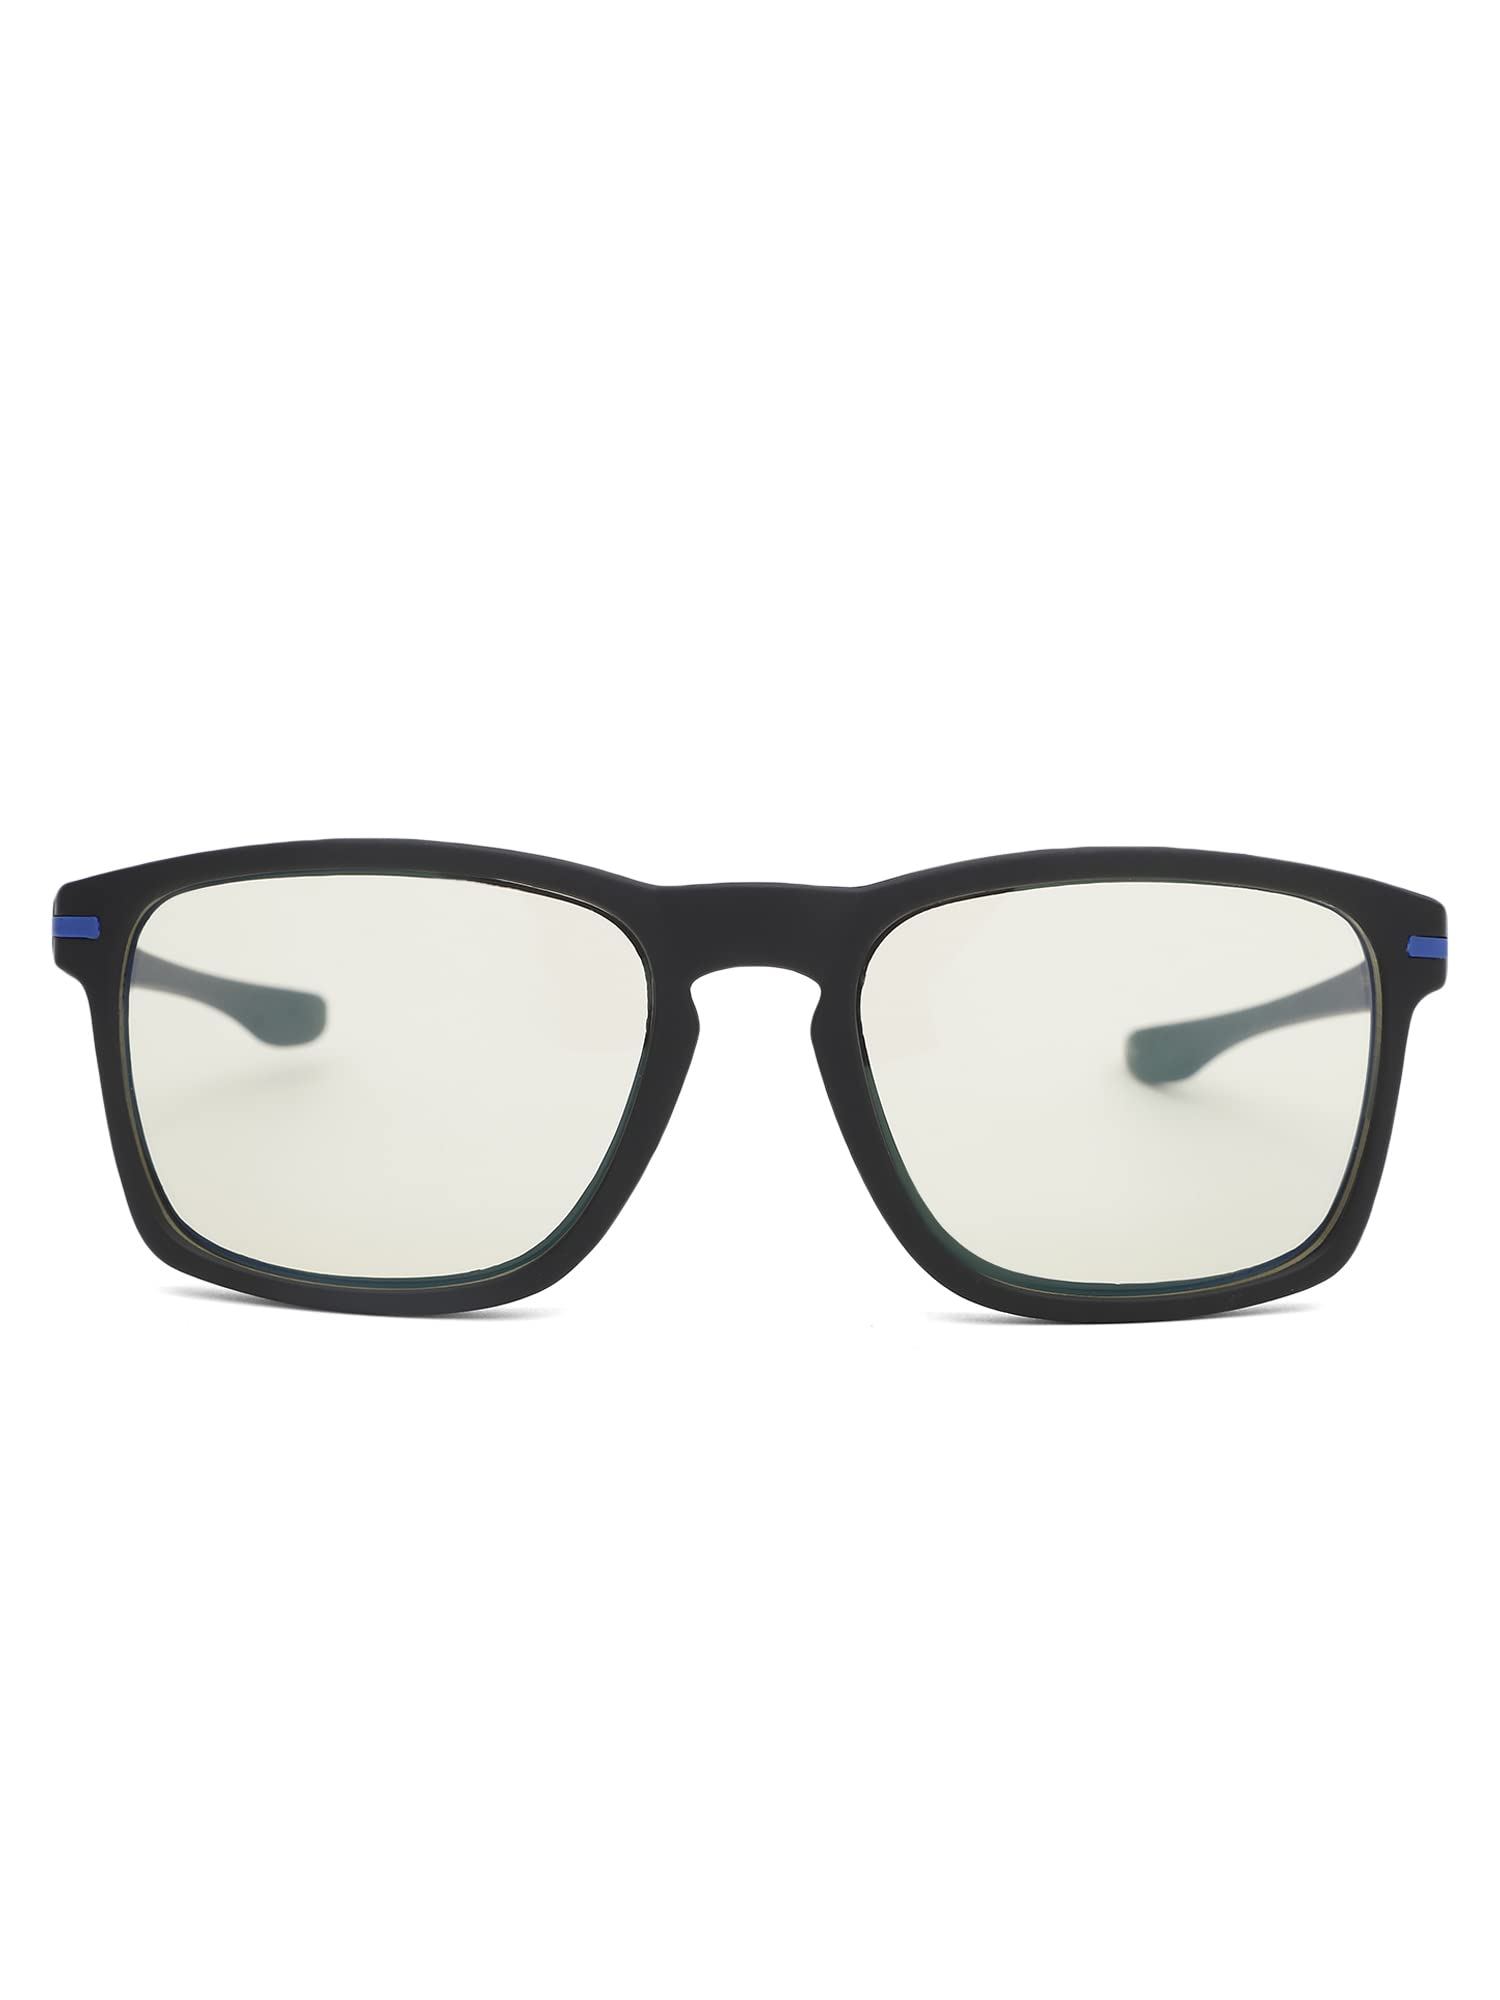 Intellilens Blue Cut Gaming Glasses | Computer Glasses for Eye Protection | Zero Power, Anti Glare & Blue Light Filter Glasses | UV Protection Specs for Men & Women